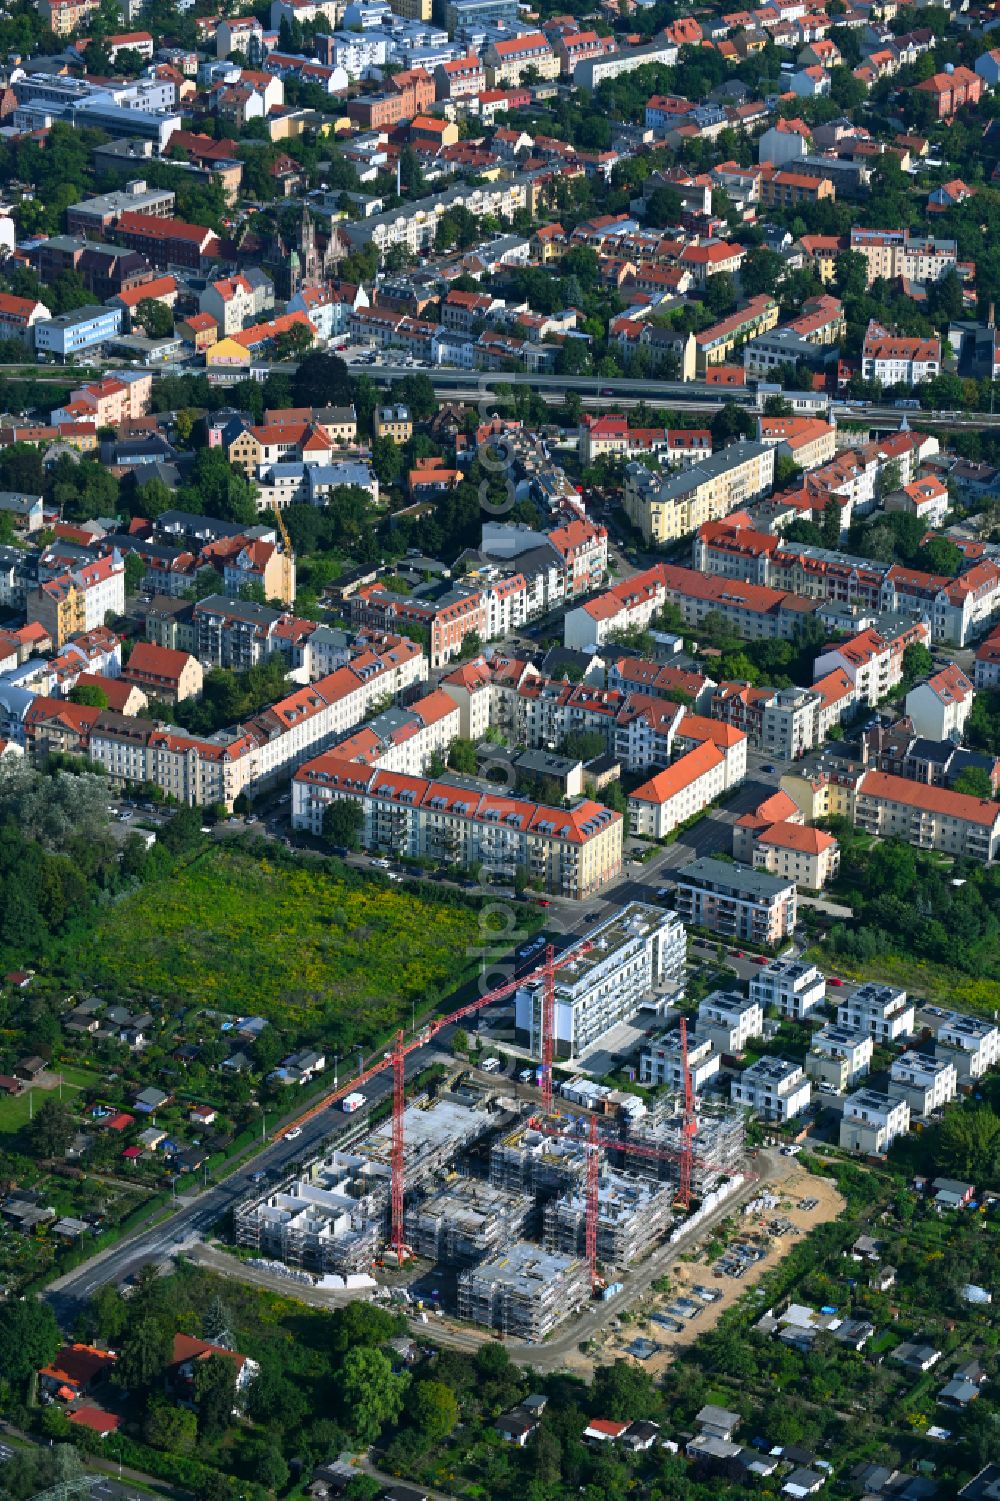 Aerial image Potsdam - Residential construction site with multi-family housing development- of the project Residenz Babelsberg Sued on Horstweg in the district Babelsberg Sued in Potsdam in the state Brandenburg, Germany